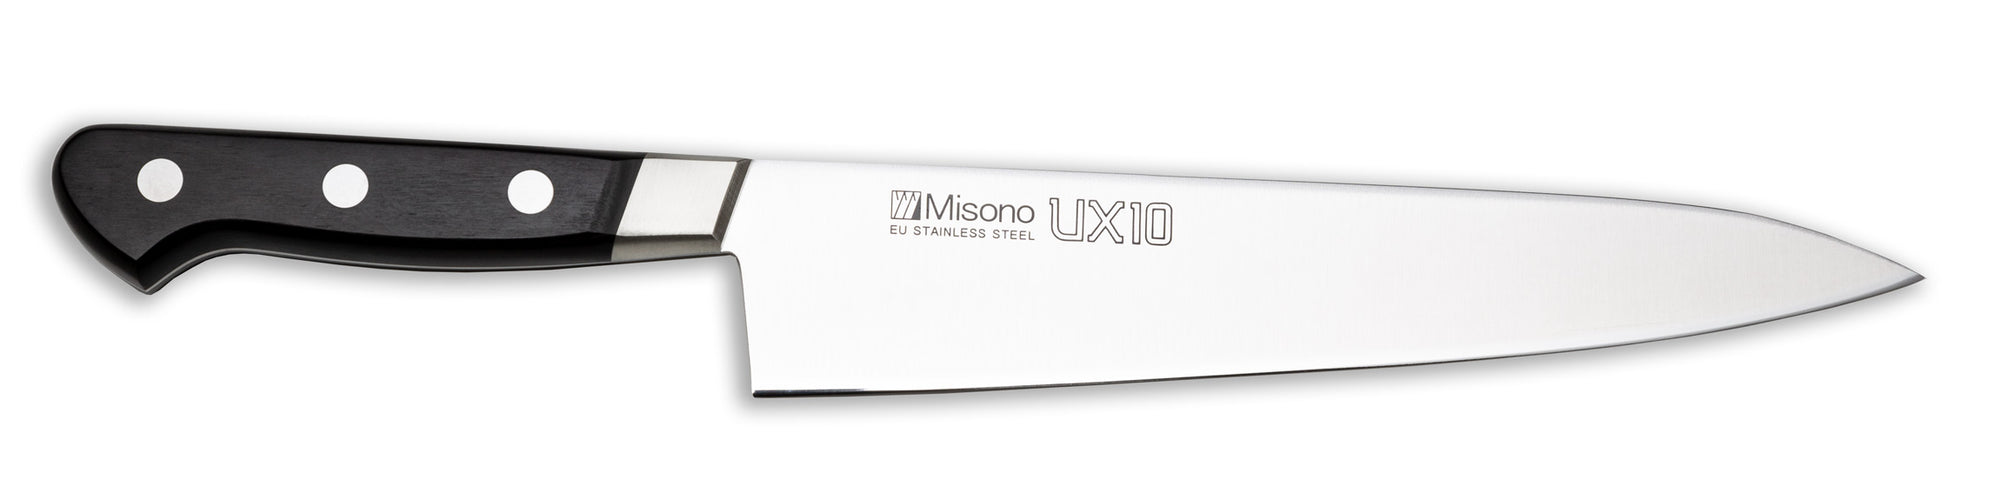 Misono UX10 210mm 8 inch chef knife gyutou Canada